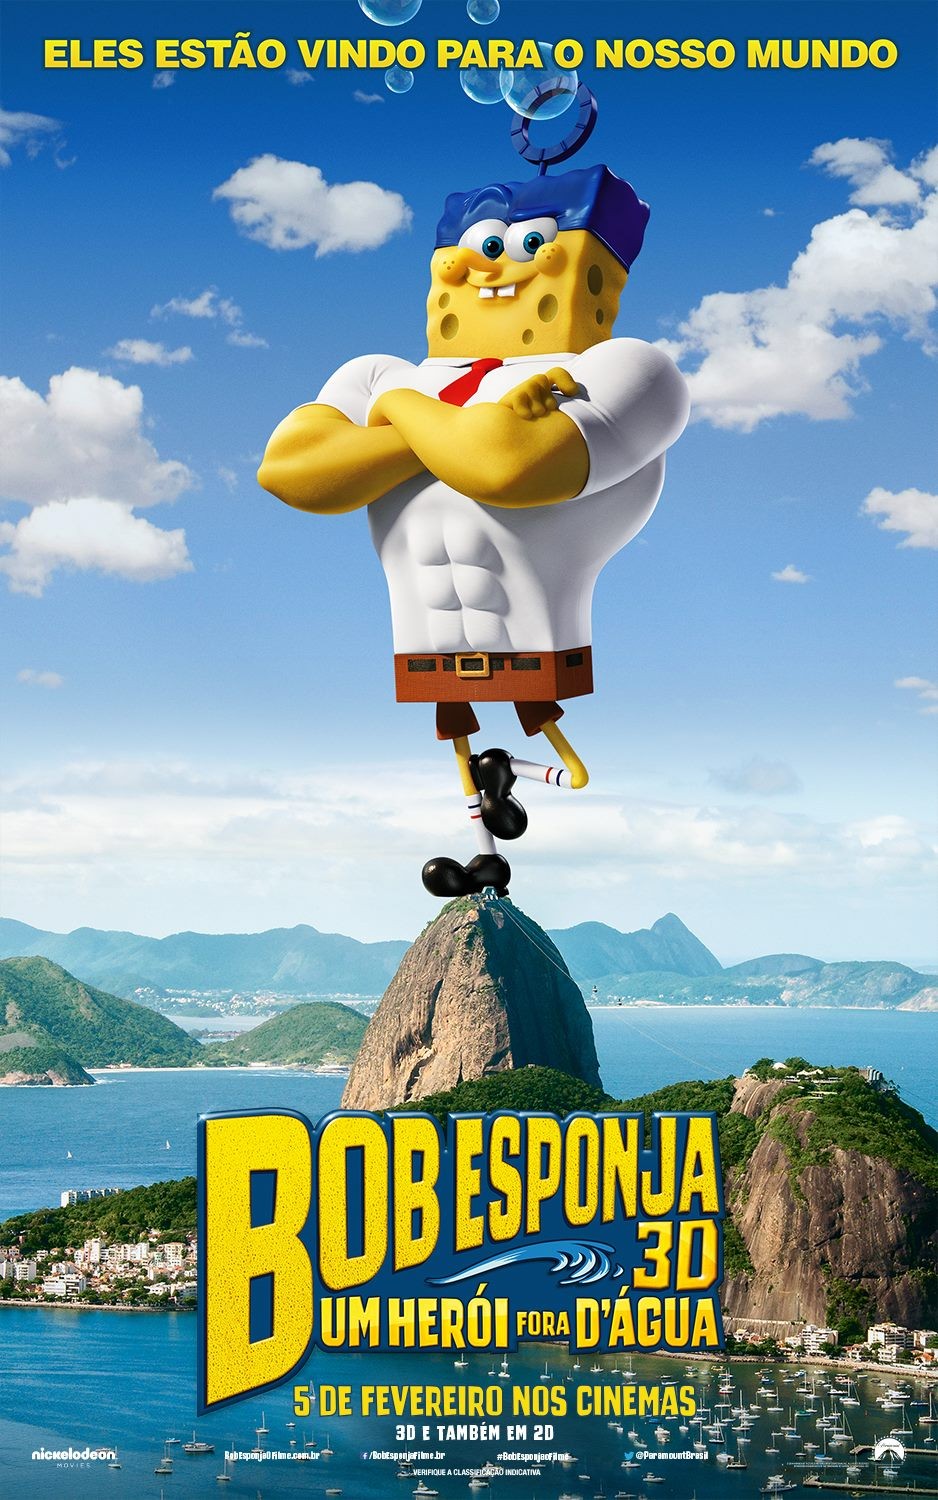 Extra Large Movie Poster Image for SpongeBob SquarePants 2 (#15 of 33)